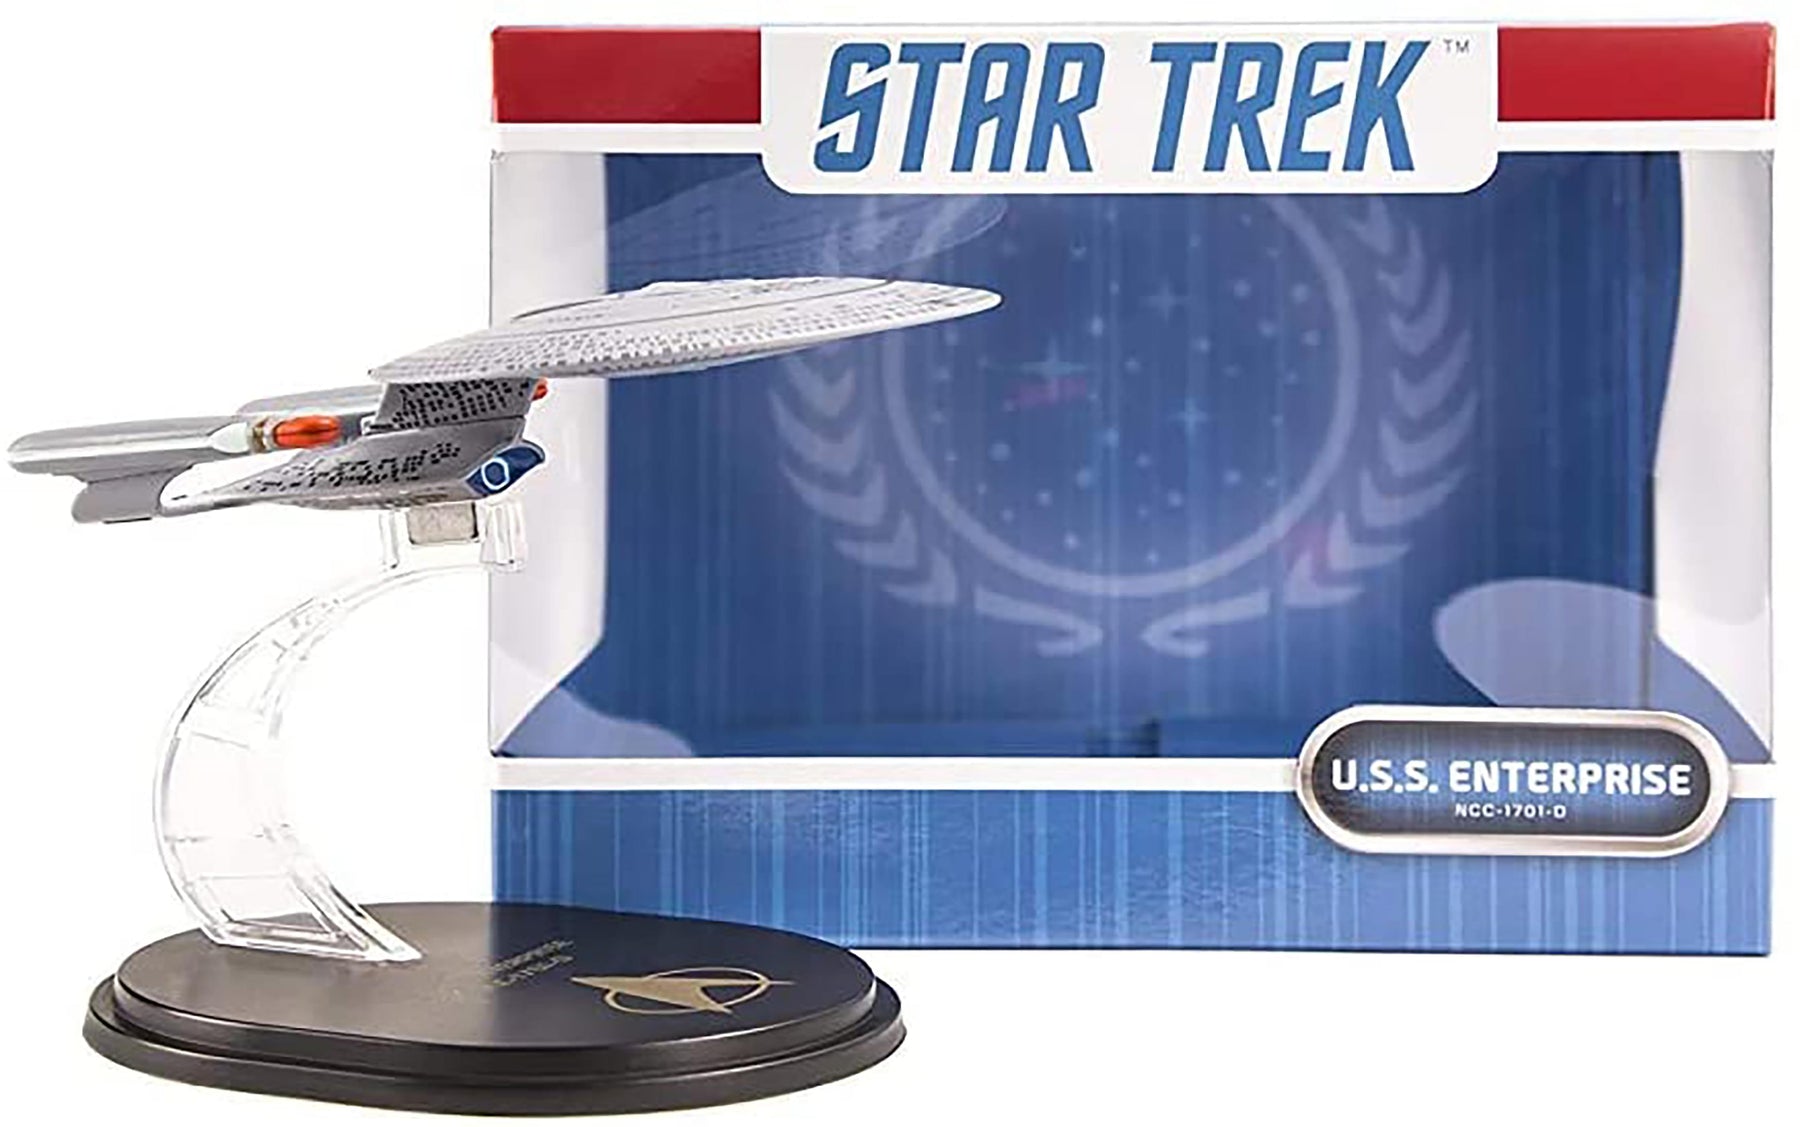 Star Trek The Next Generation U.S.S. Enterprise NCC-1701-D Mini Master Replica